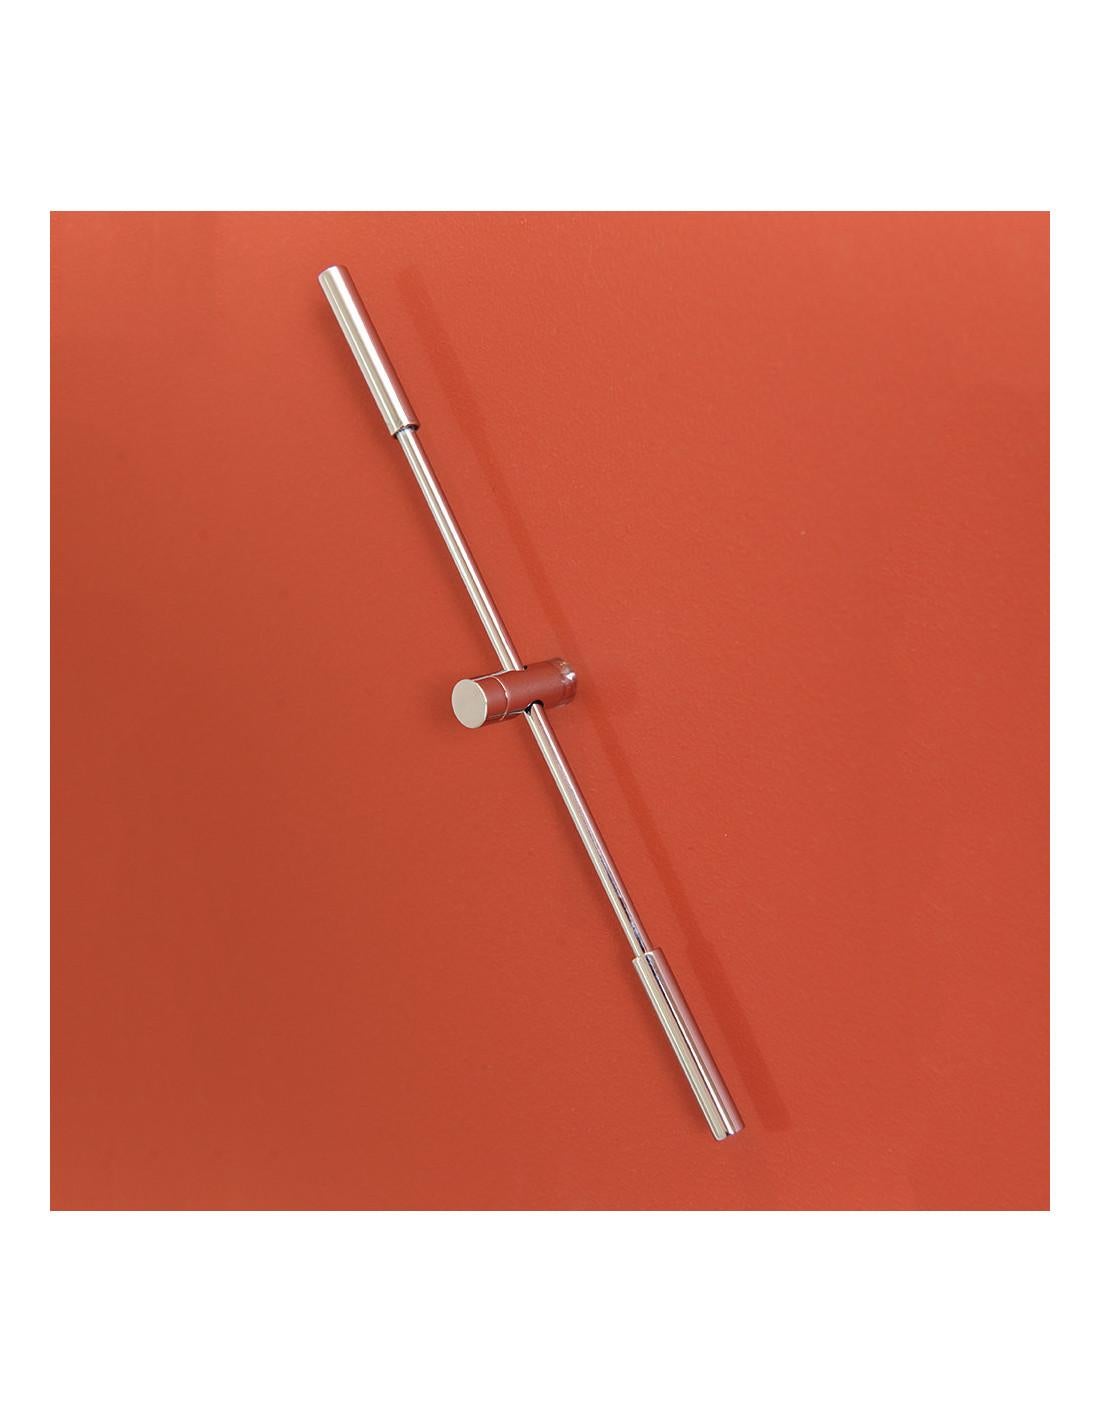 Spanish Merlín 12 i Wall Clock For Sale